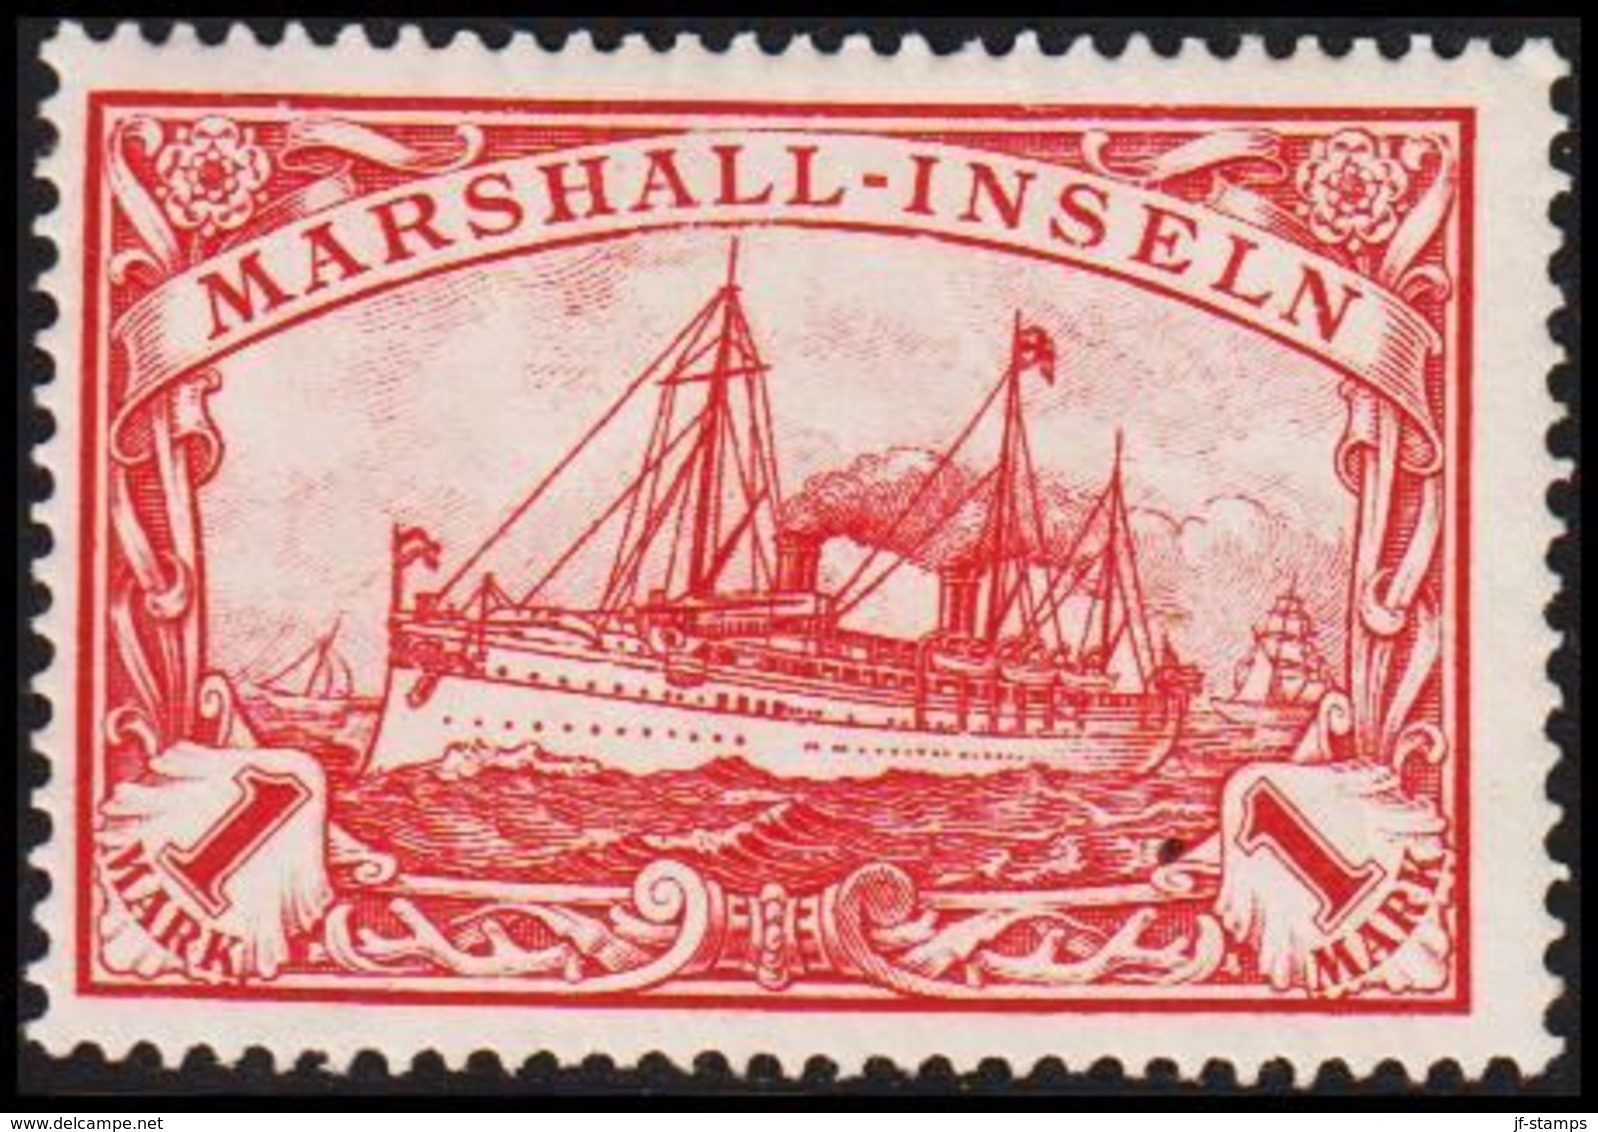 1901. MARSHALL-INSELN 1 MARK Kaiserjacht SMS Hohenzollern. (Michel 22) - JF319466 - Marshall-Inseln